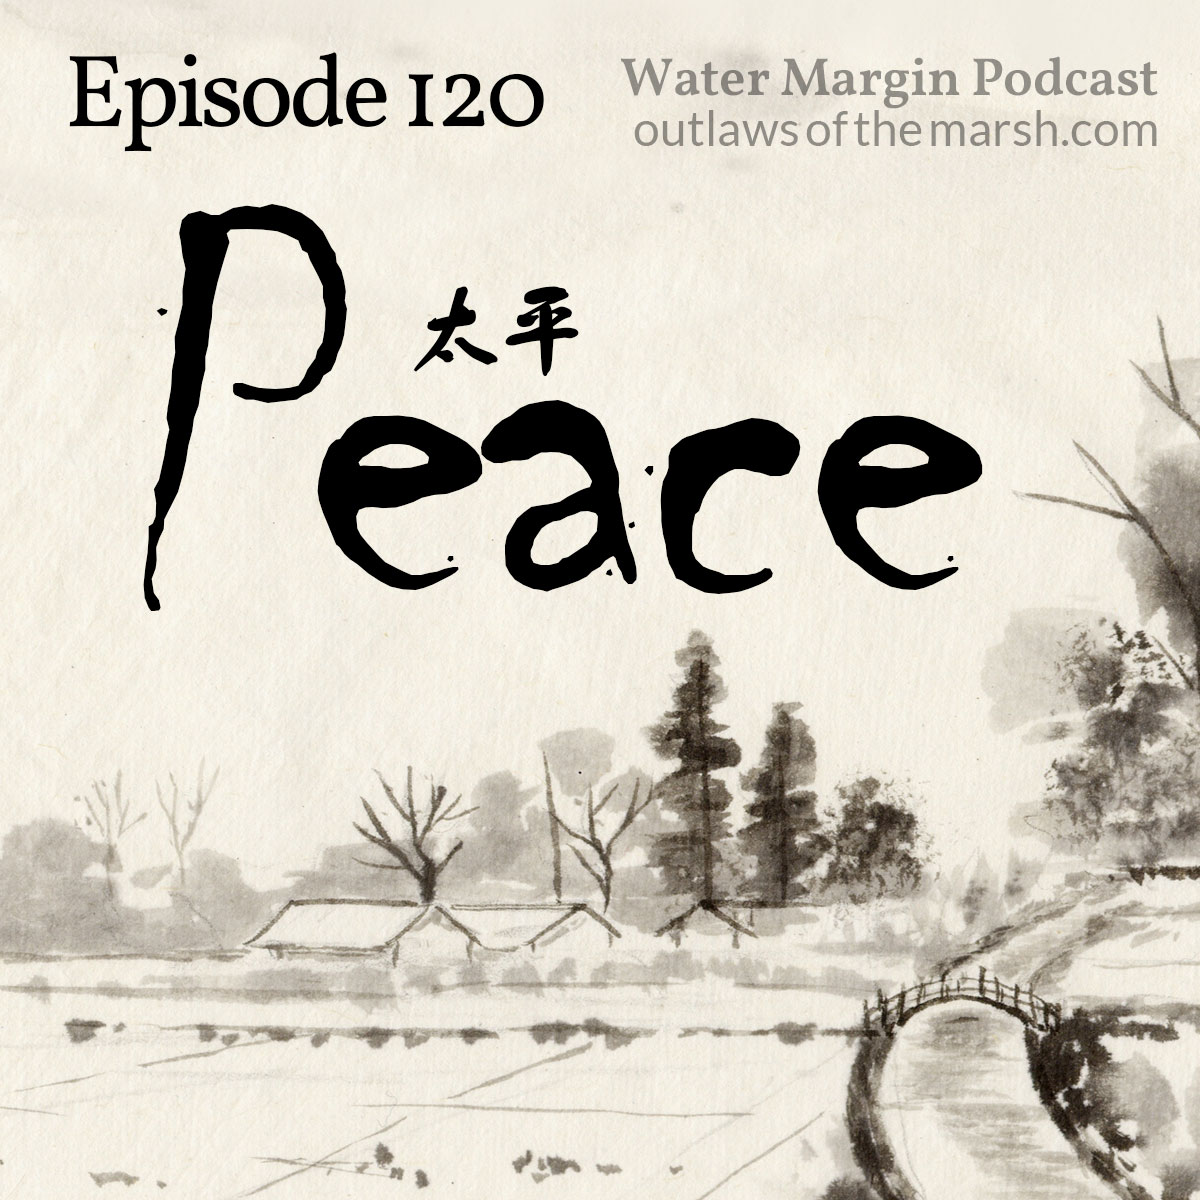 Water Margin Podcast: Episode 120